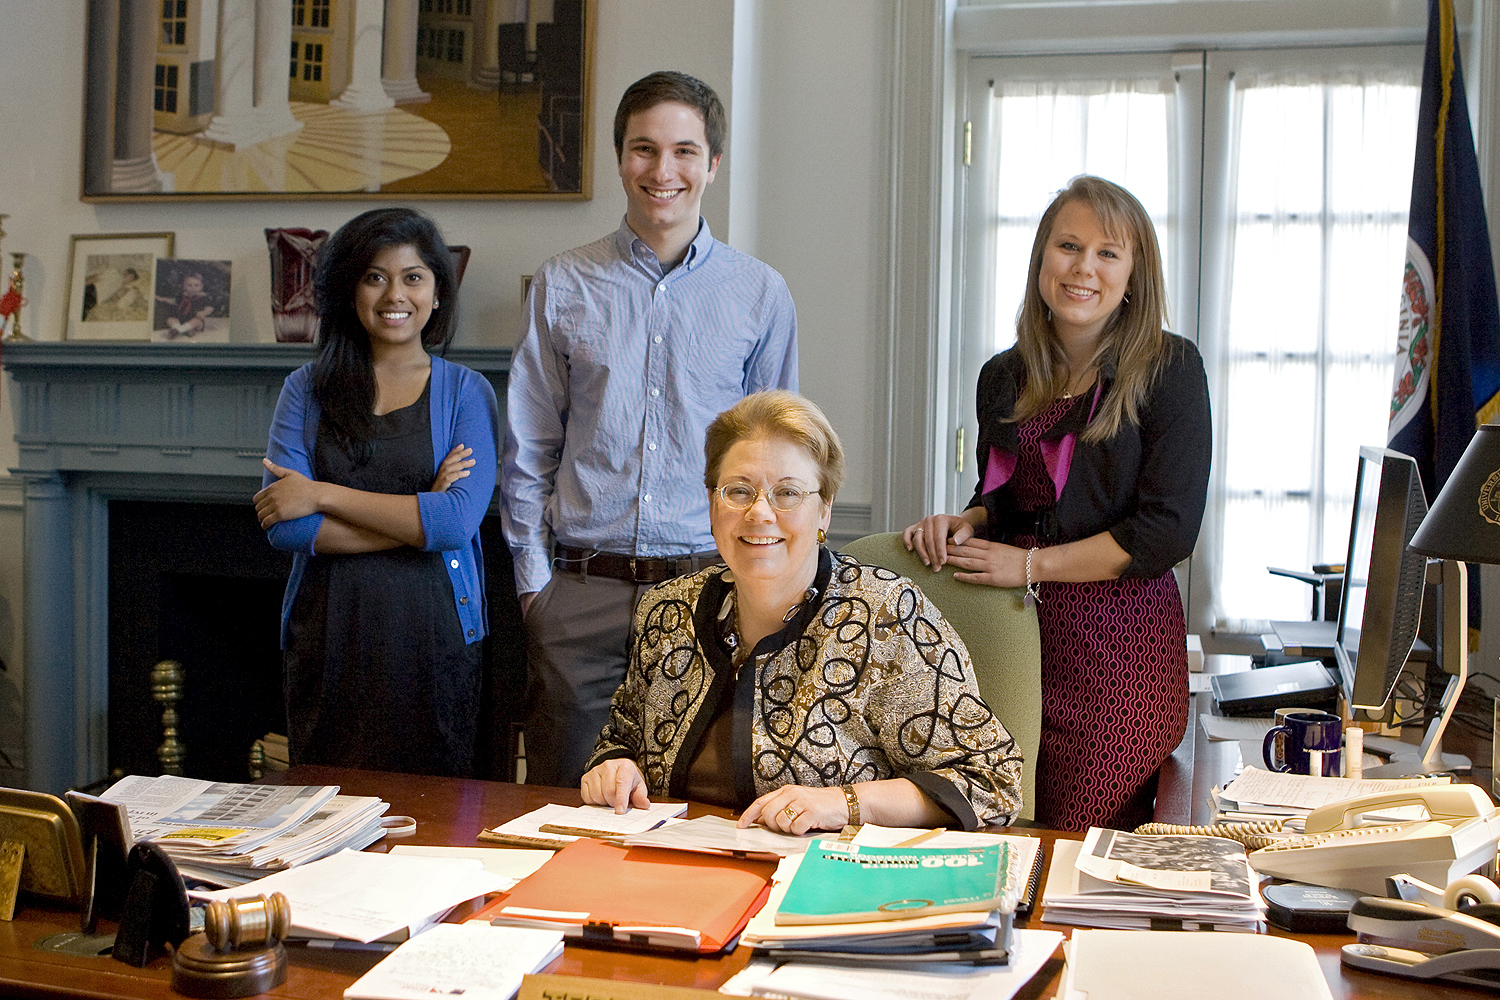 Group photo in President Sullivans office From left, Saara Zaman, Kevin Mernin and Kayla Harmon with U.Va. President Teresa A. Sullivan